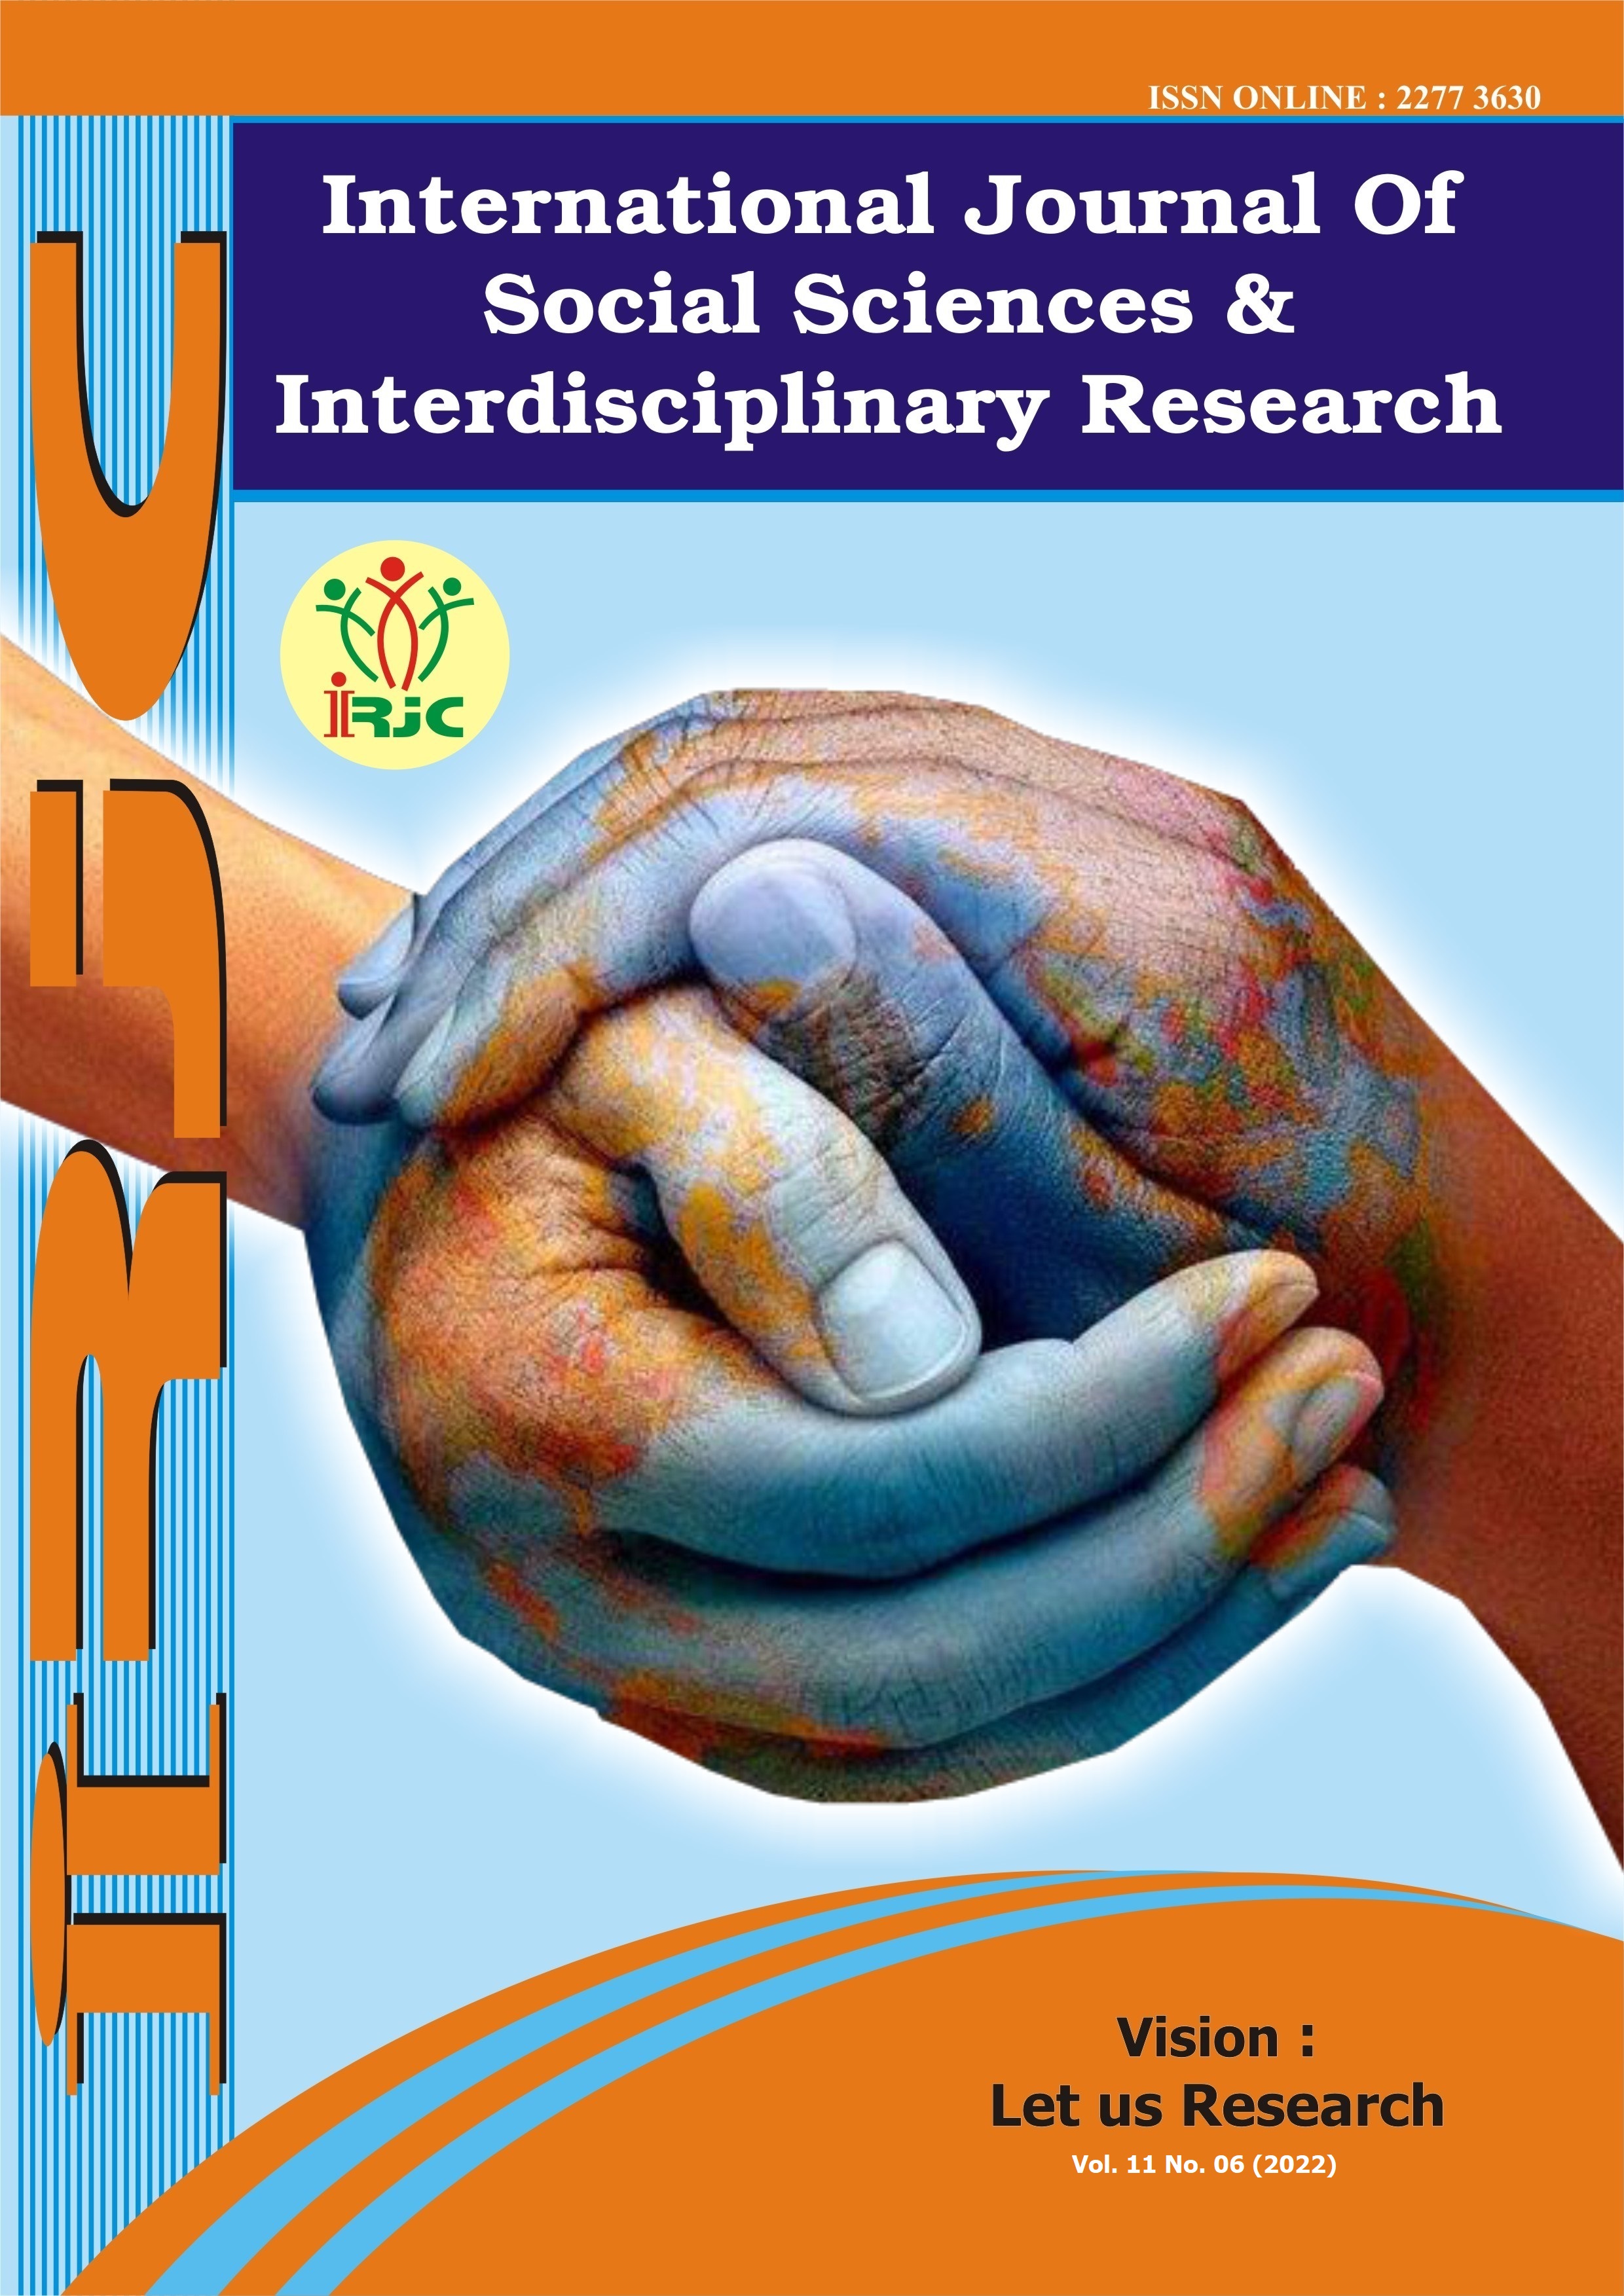 					View Vol. 11 No. 09 (2022):  INTERNATIONAL JOURNAL OF SOCIAL SCIENCE & INTERDISCIPLINARY RESEARCH
				